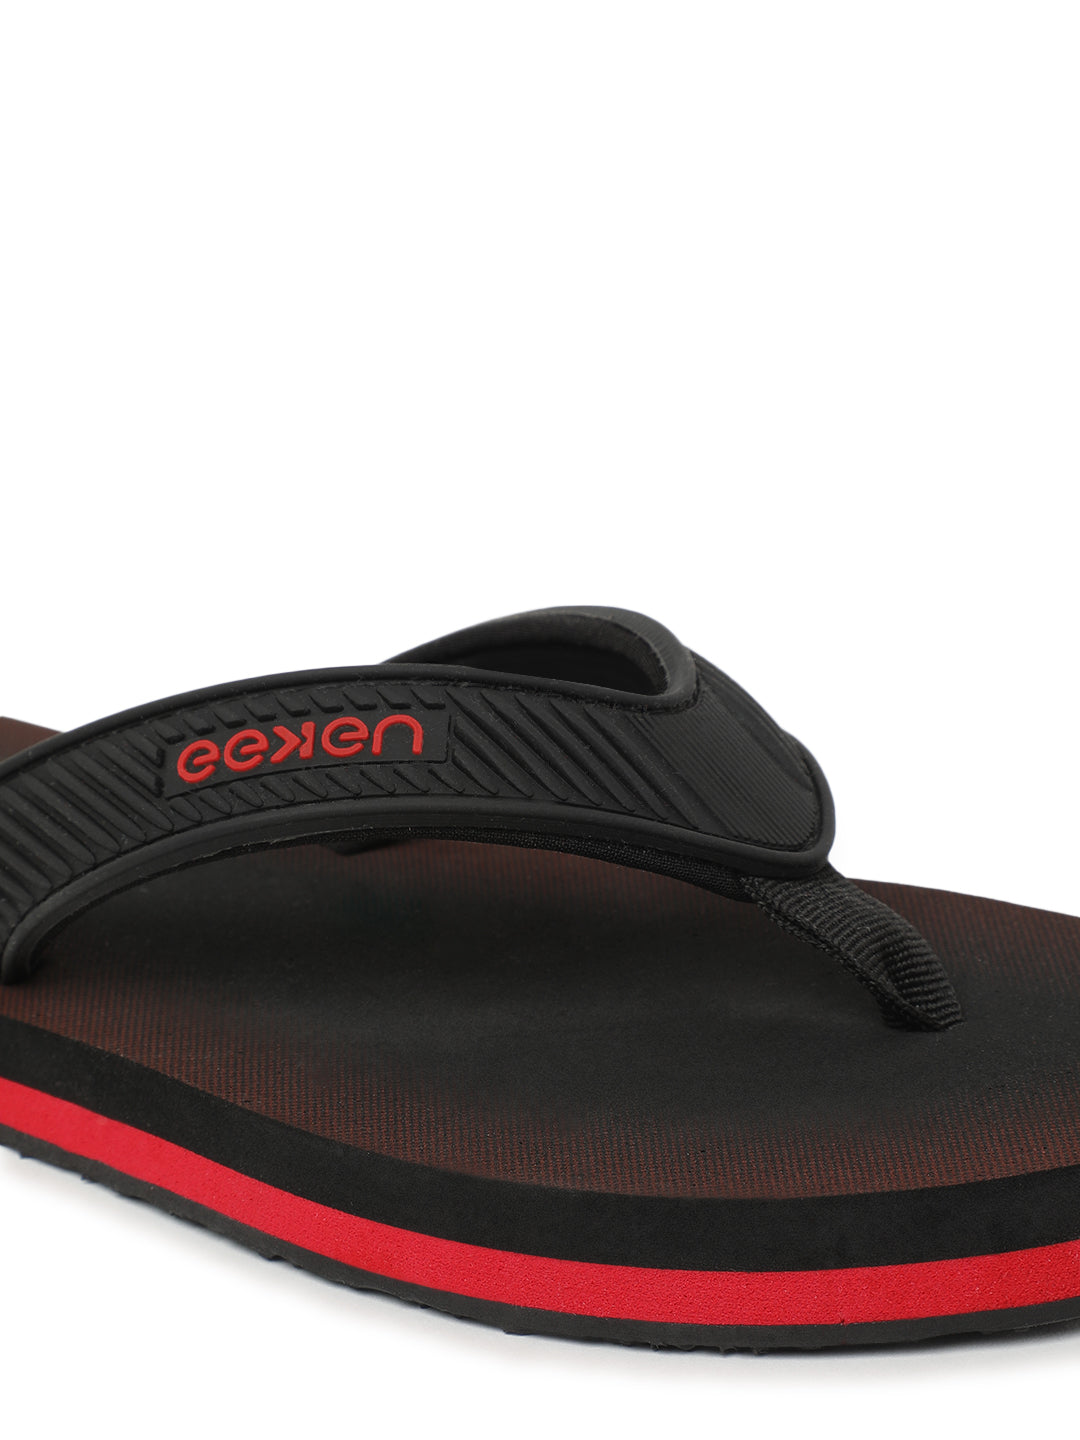 Eeken EFBG2028 Black And Red Classic Flip Flops For Men